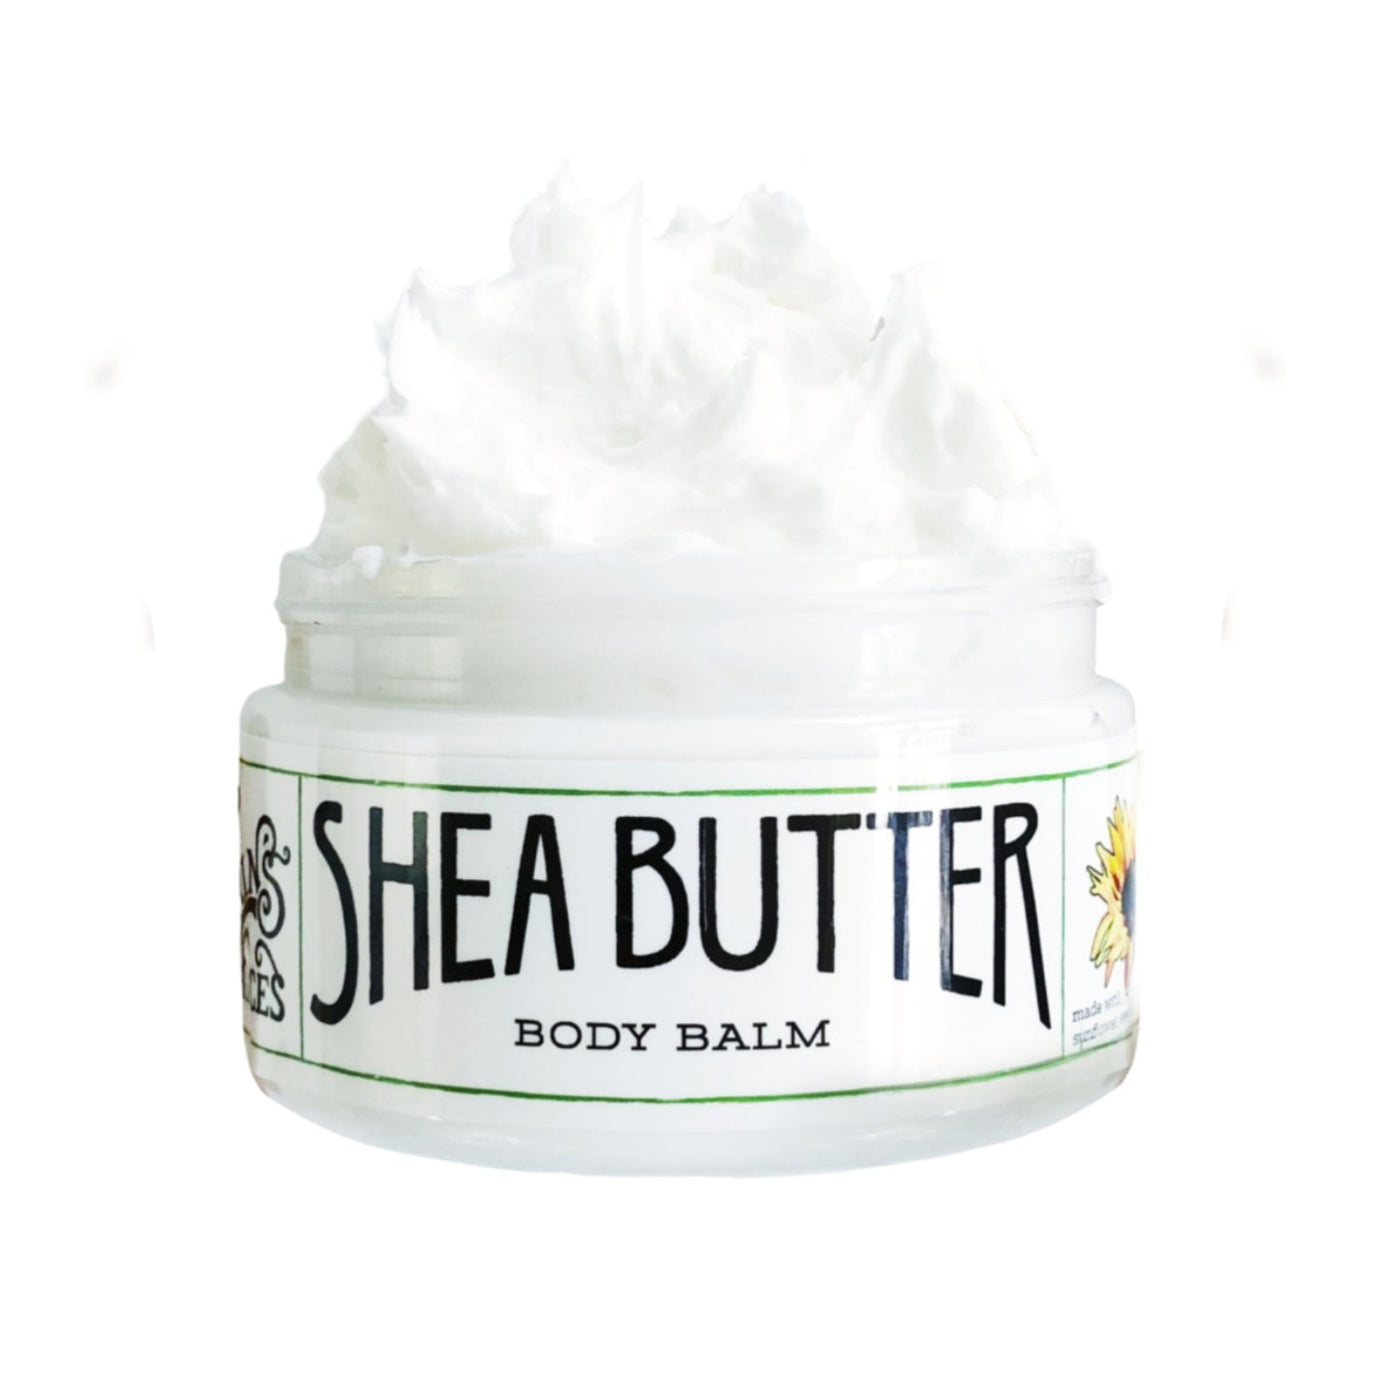 opened 8oz jar of the shea butter body balm moisturizer